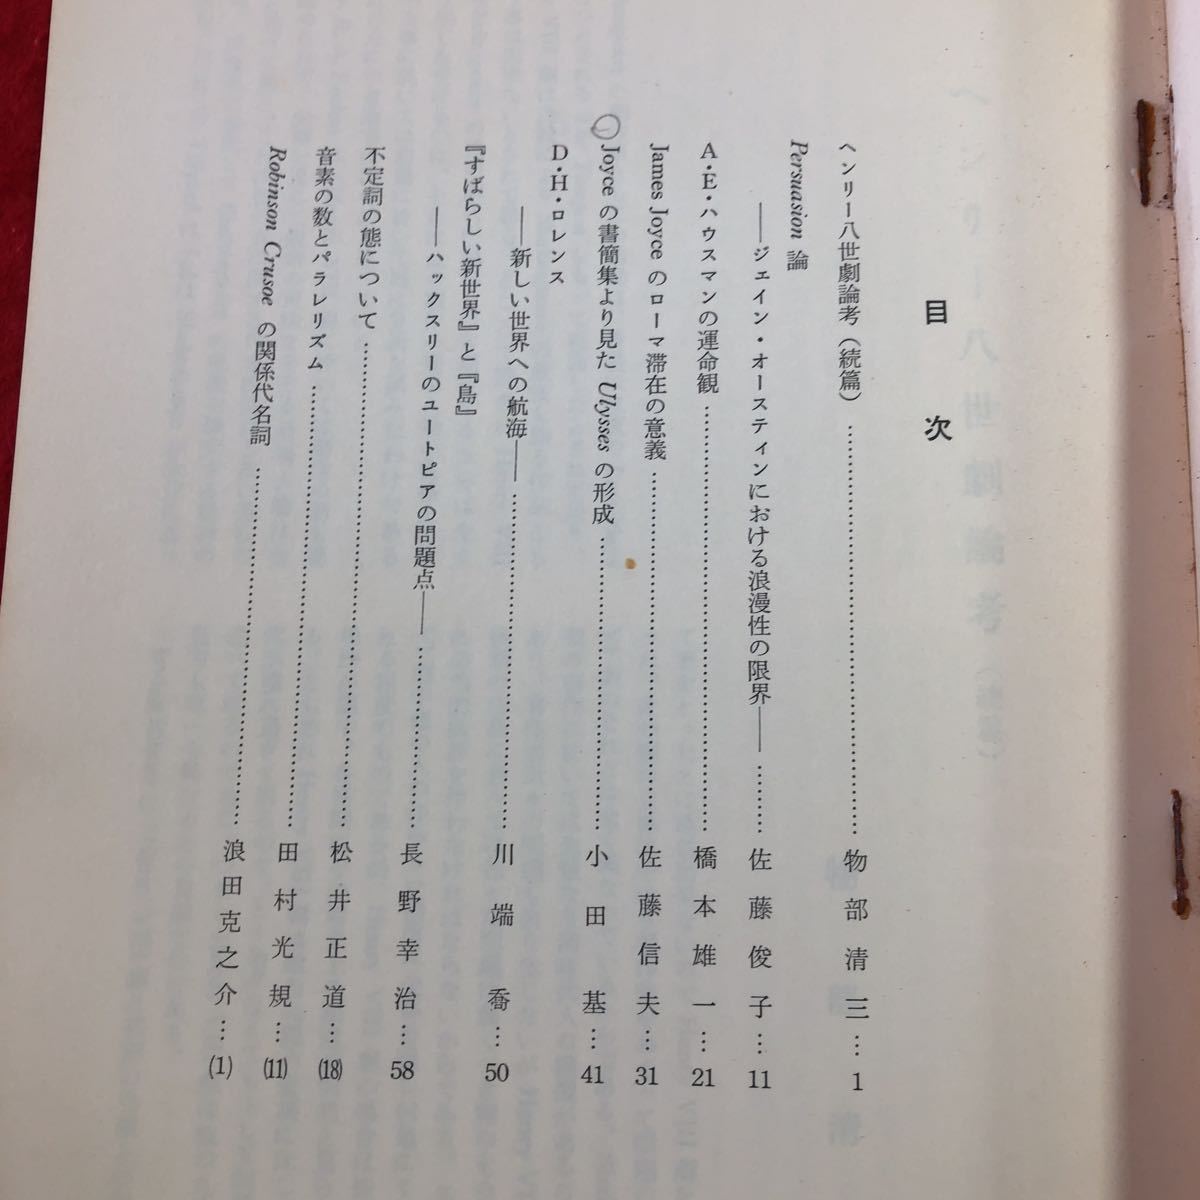 S6f-236 北海道英語英文学 第9号 昭和39年6月30日 発行 日本英文学会北海道支部 論文 英語 文学 語学 和文 書評 考察 研究 ヘンリー8世_ページに汚れ 書き込みあり